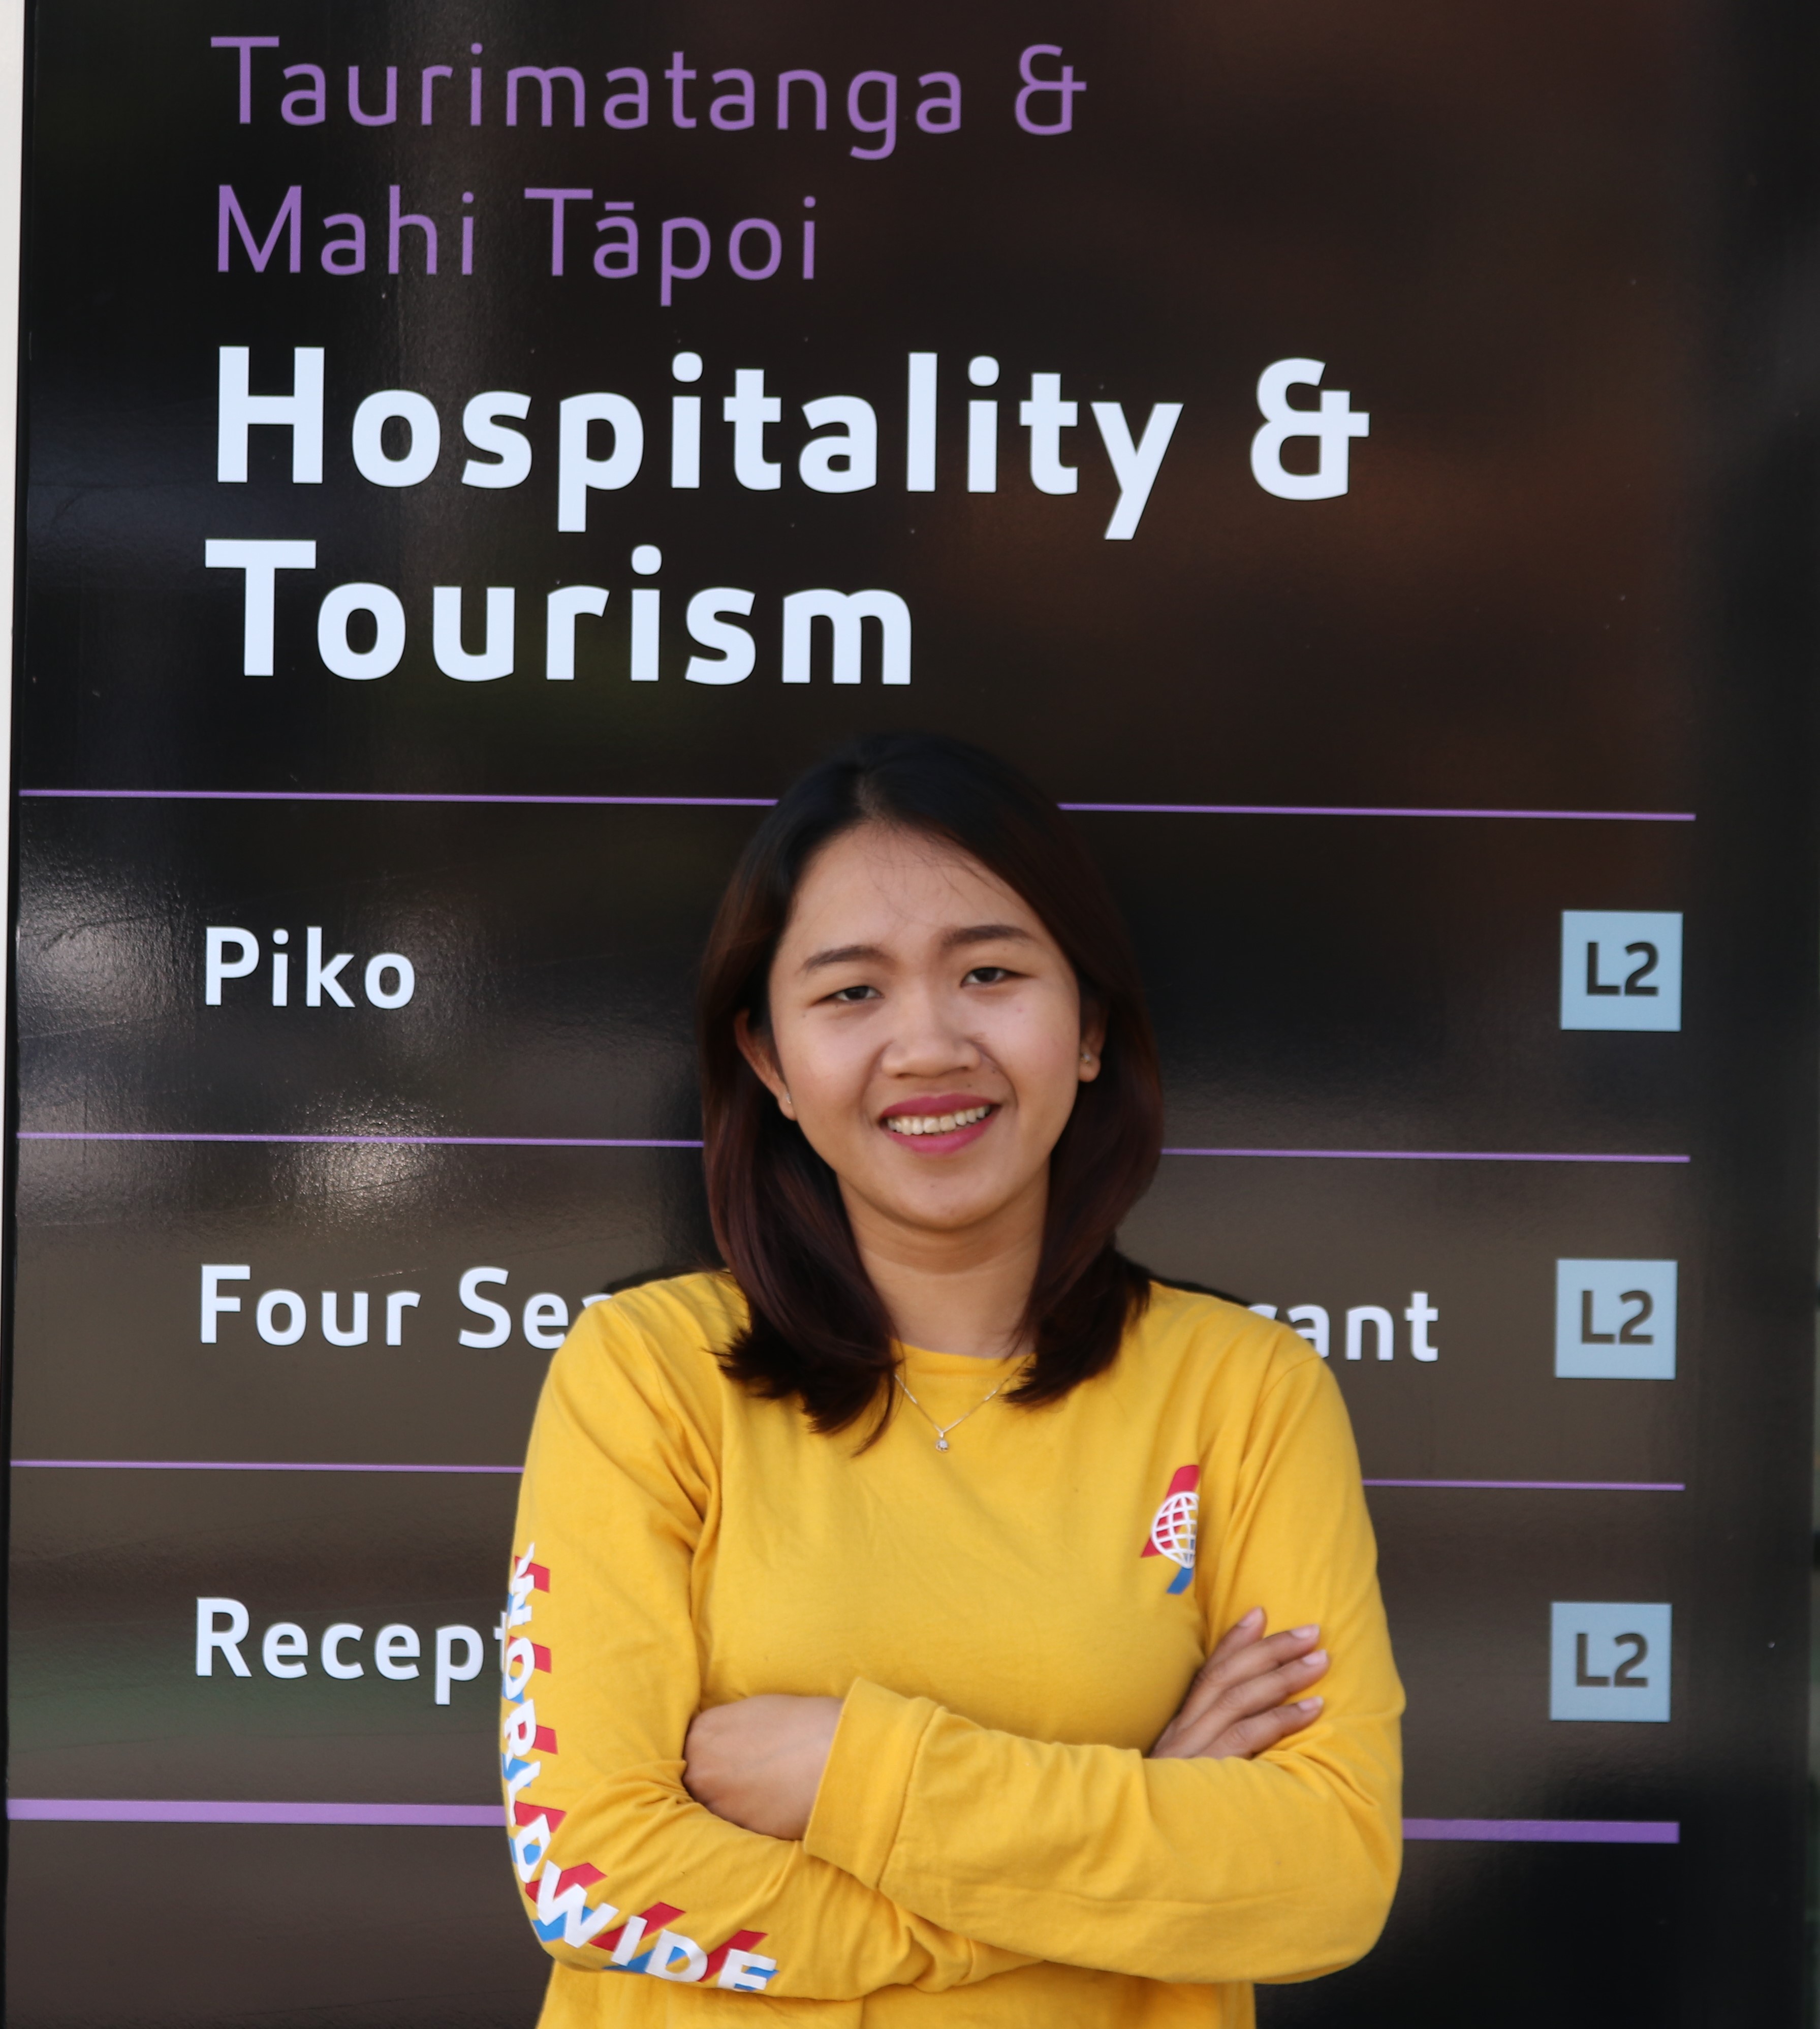 cambodia tourism federation (ctf)